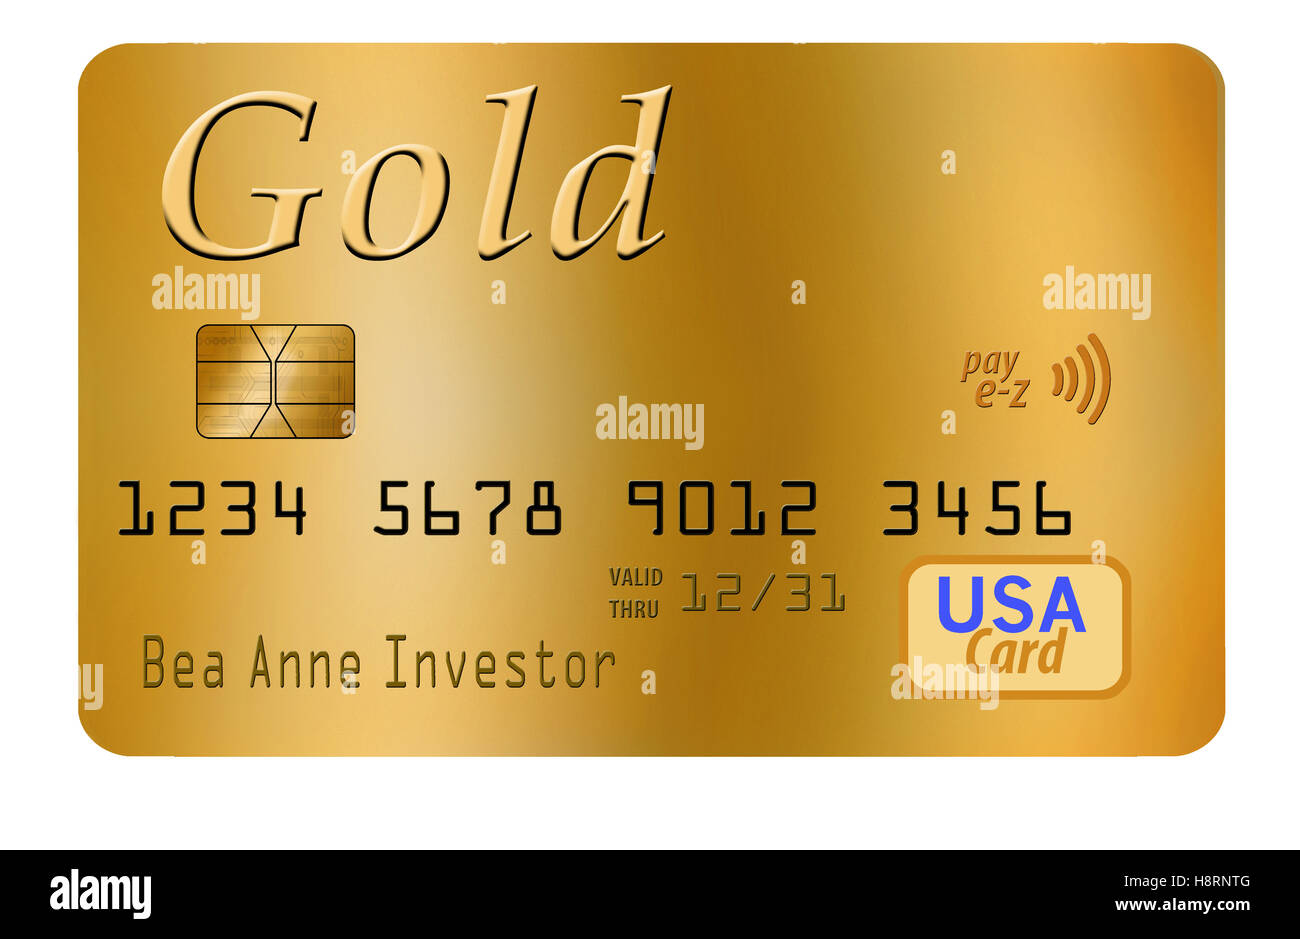 Platinum Metal Gold Metal Credit Union Credit Card High Resolution